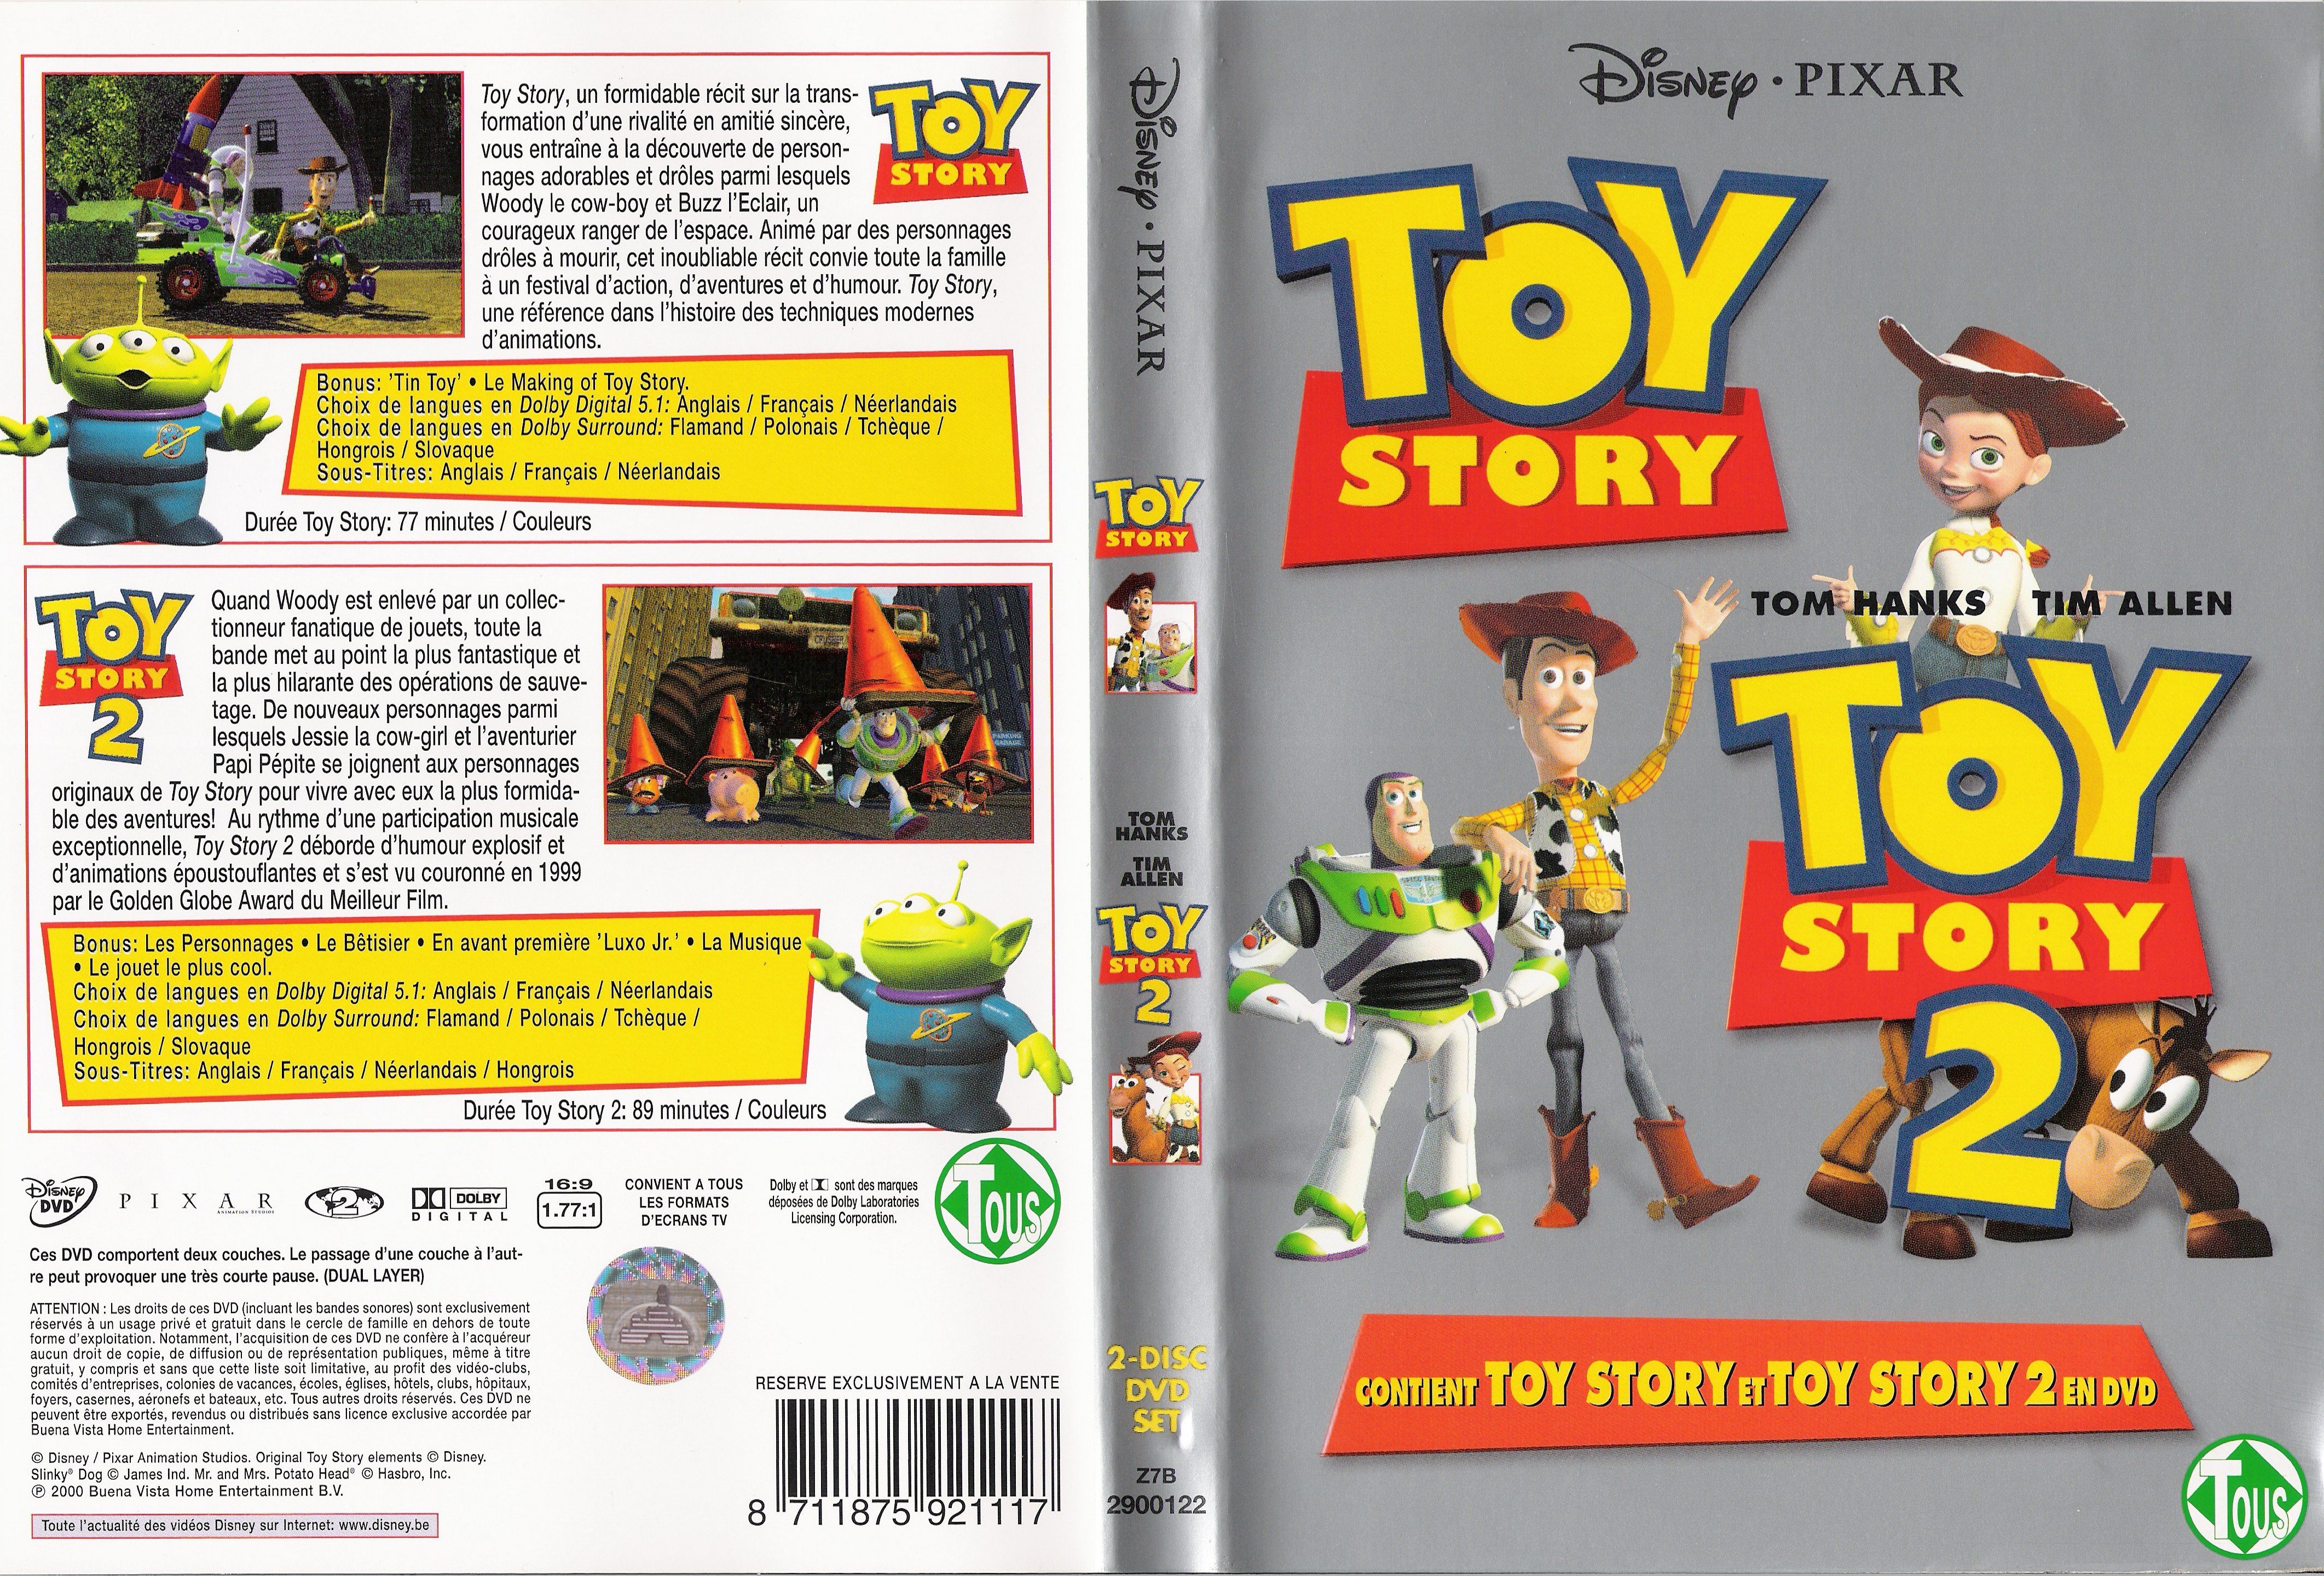 Jaquette DVD Toy Story 1 et 2